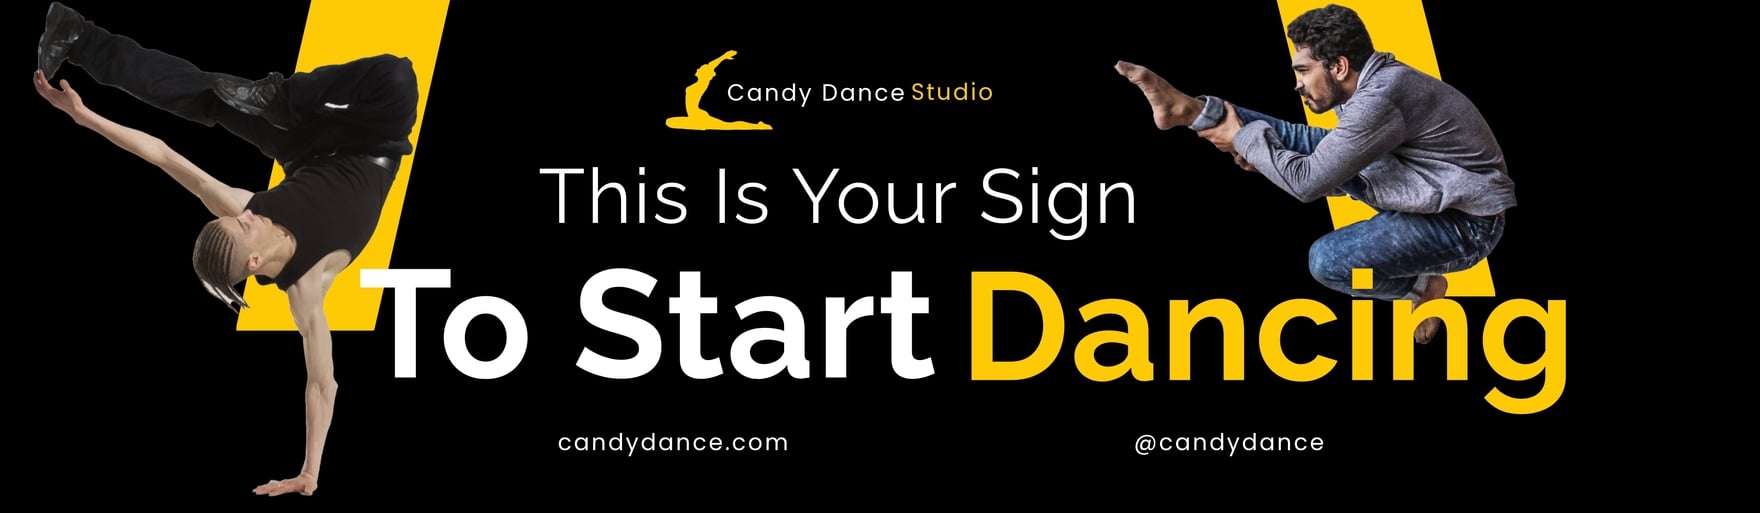 Dance Studio Billboard Template